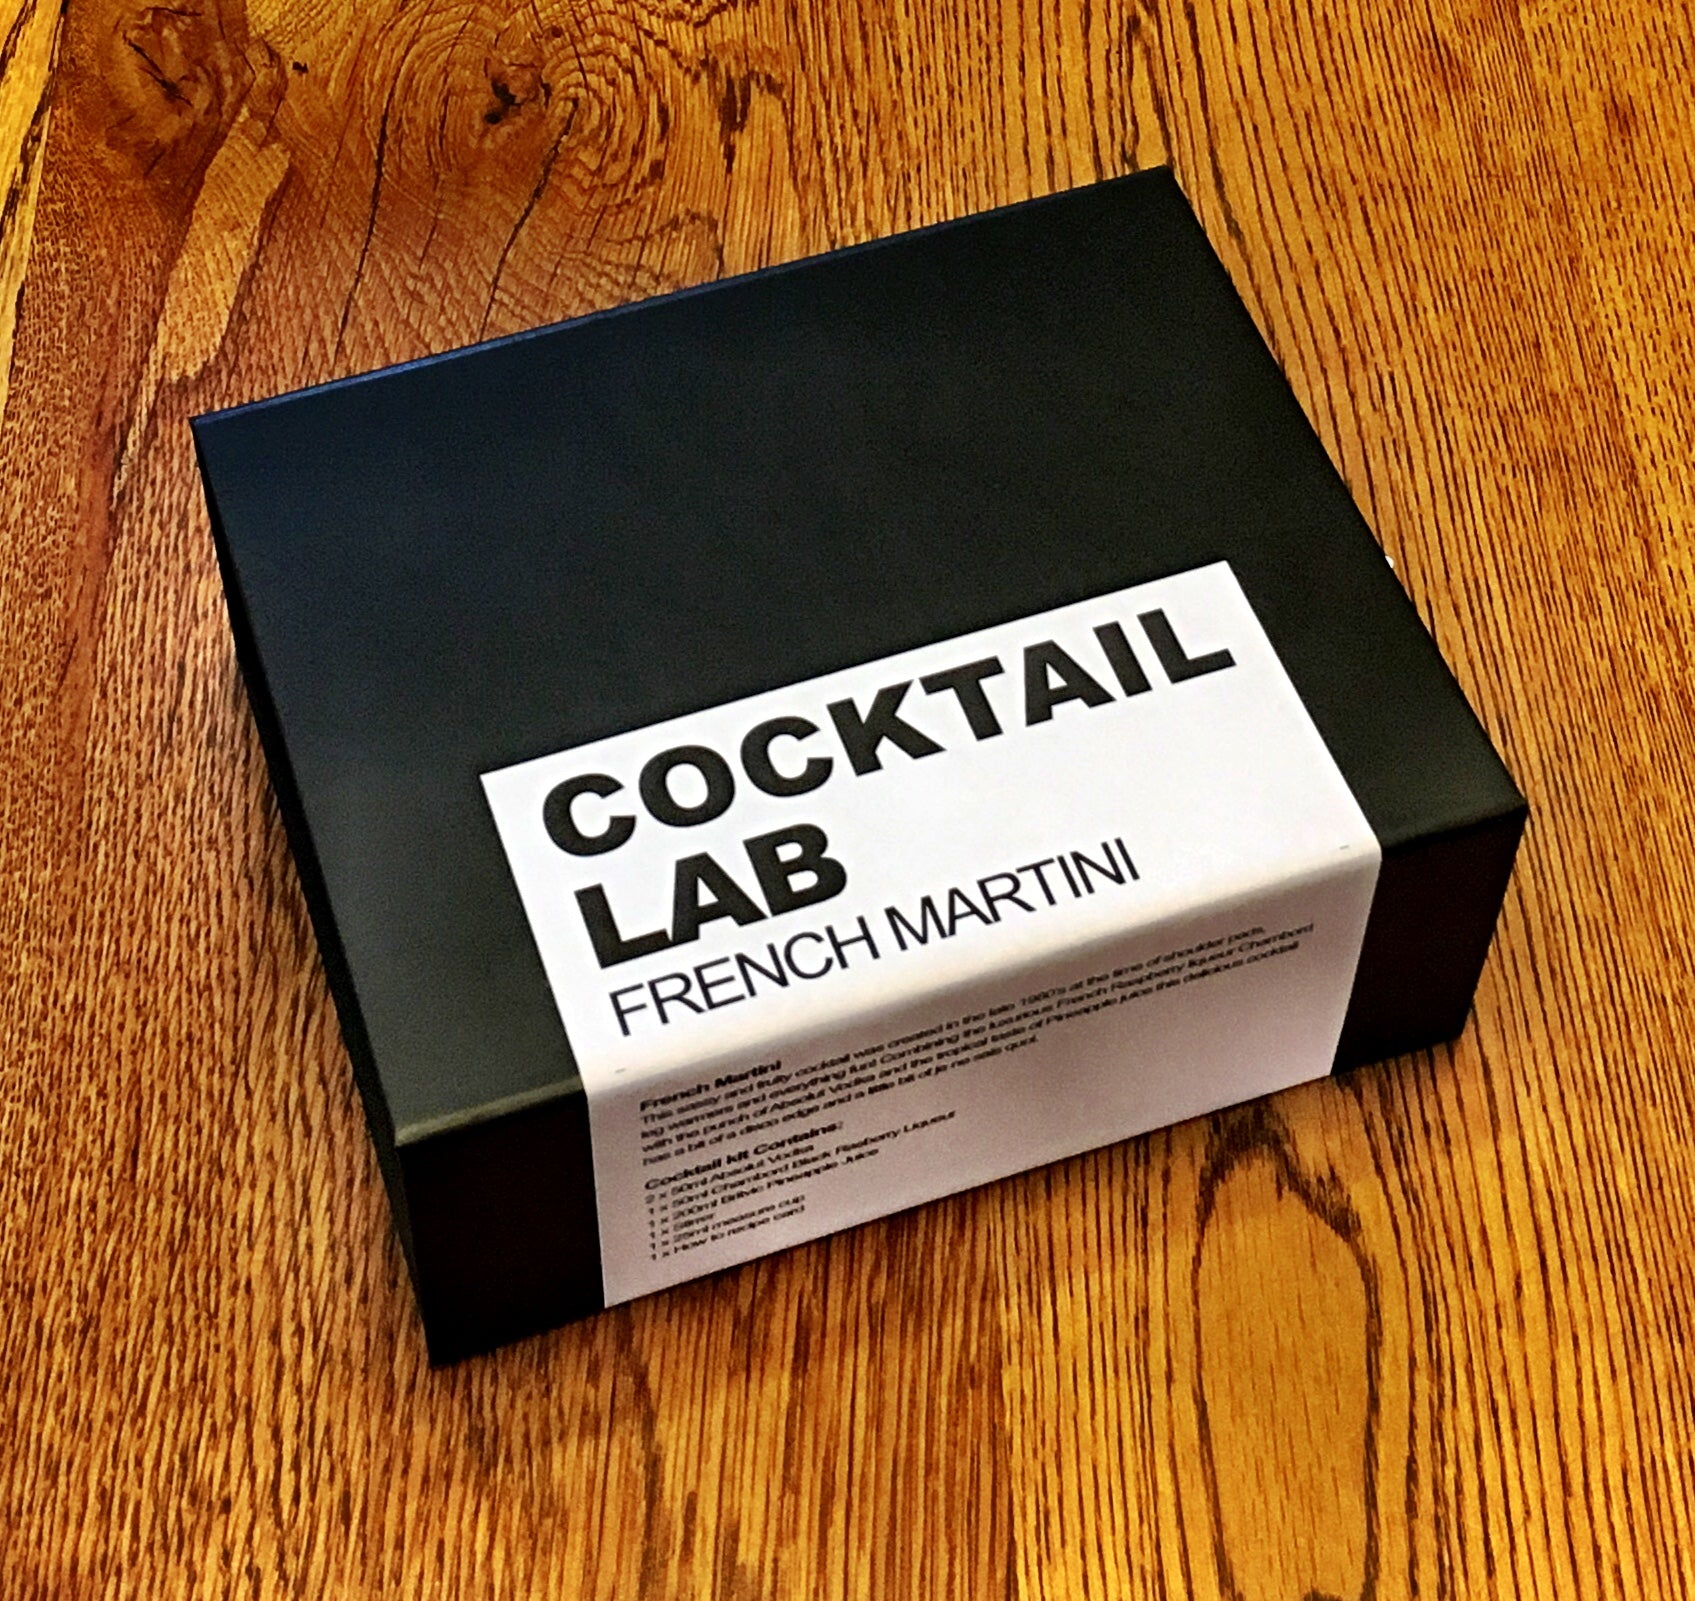 French Martini Cocktail Kit Gift Box